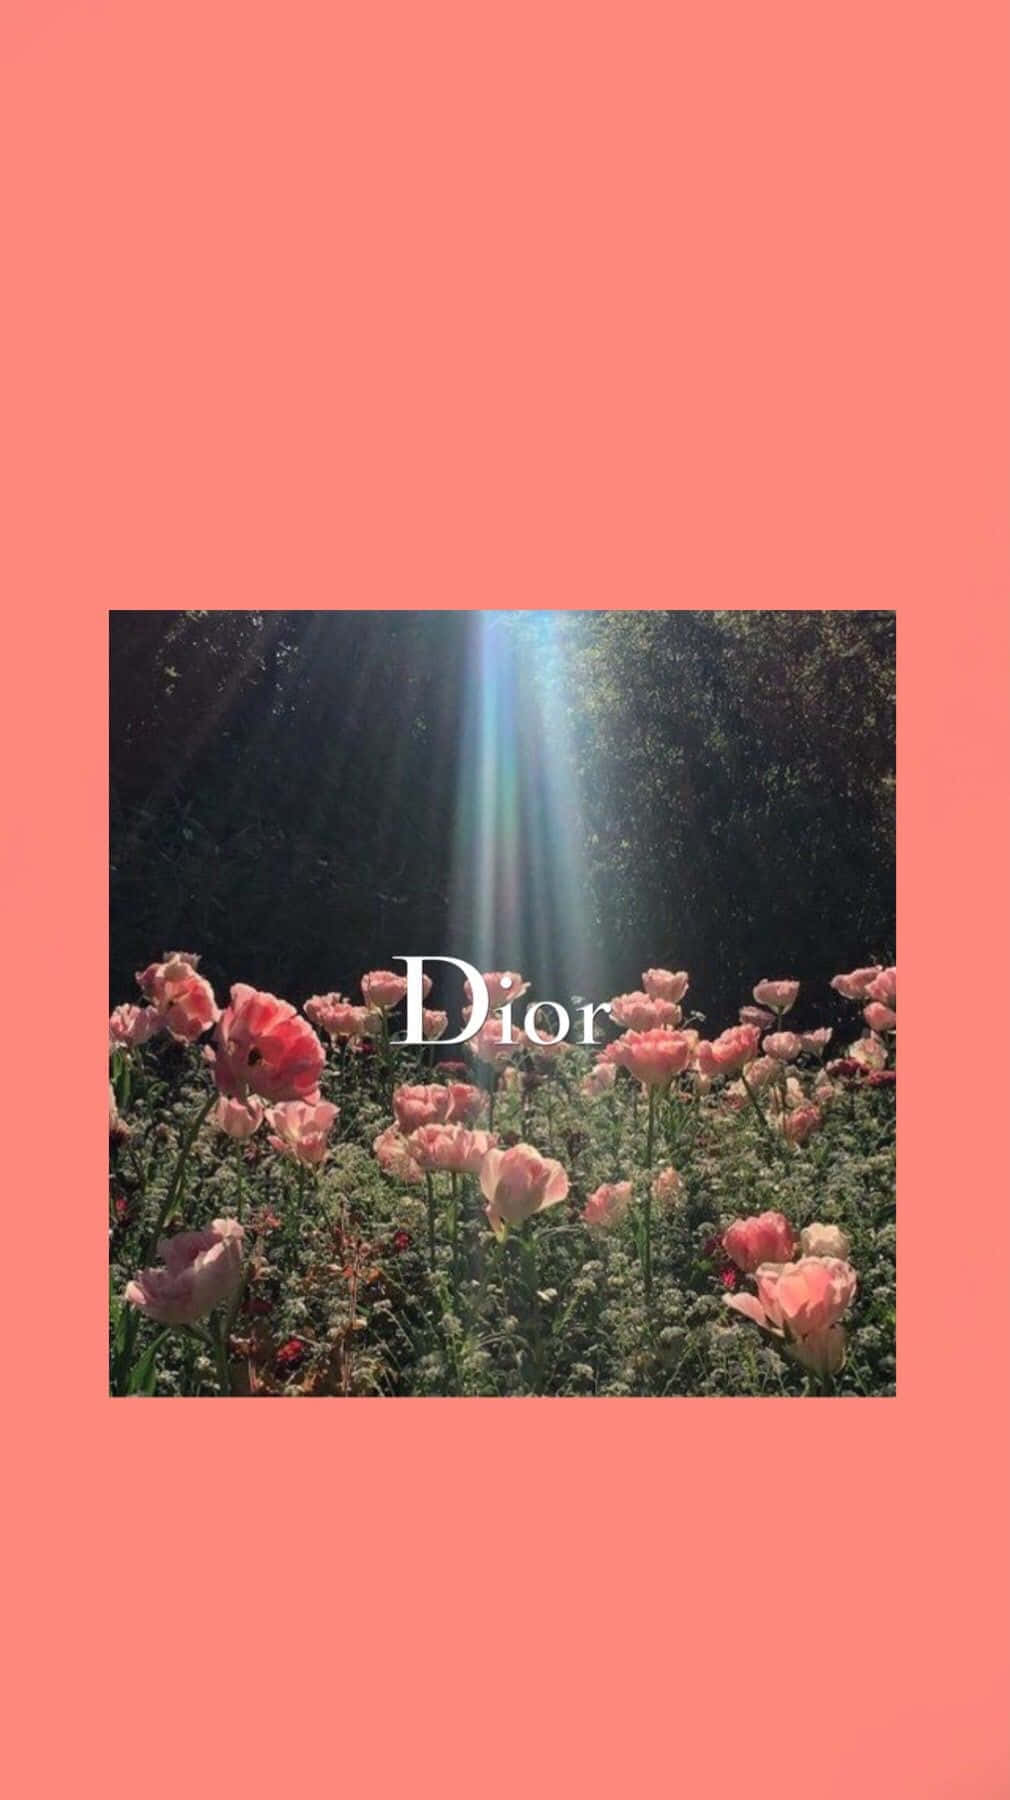 Dior Floral Sunbeam Aesthetic Wallpaper